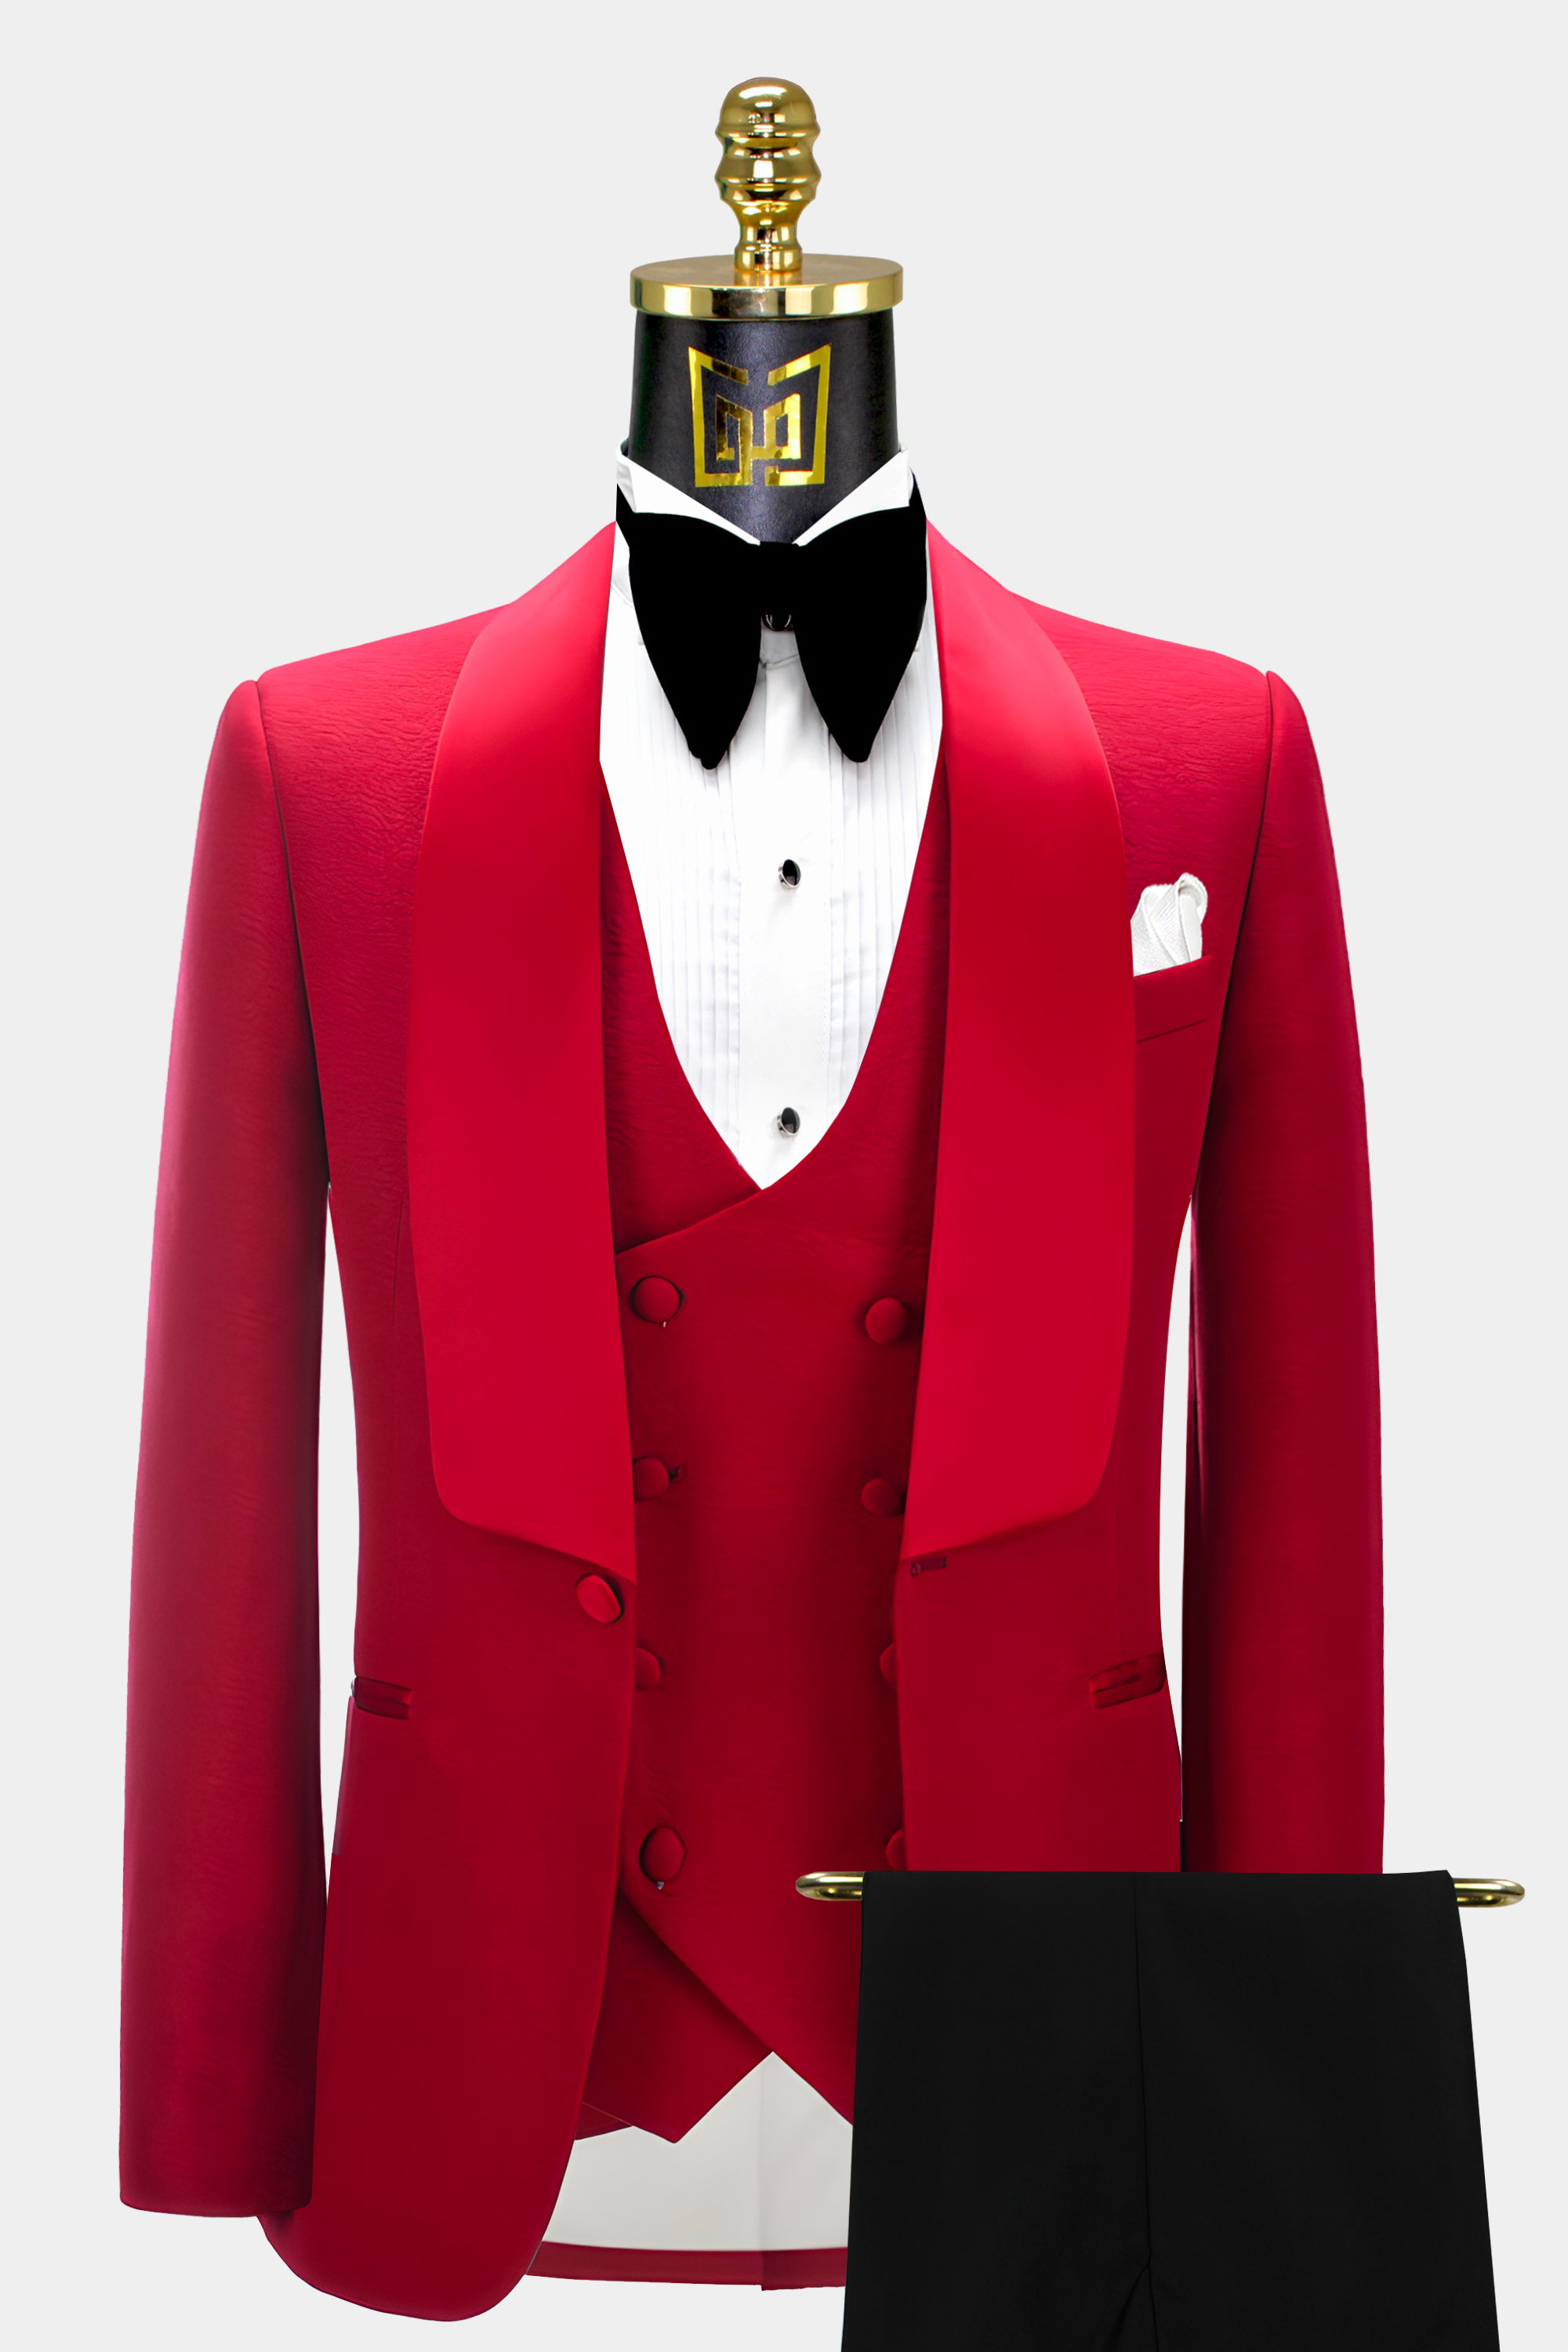 Black-Pant-Red-Patterned-Tuxedo-For-Mej-from-Gentlemansguru.com